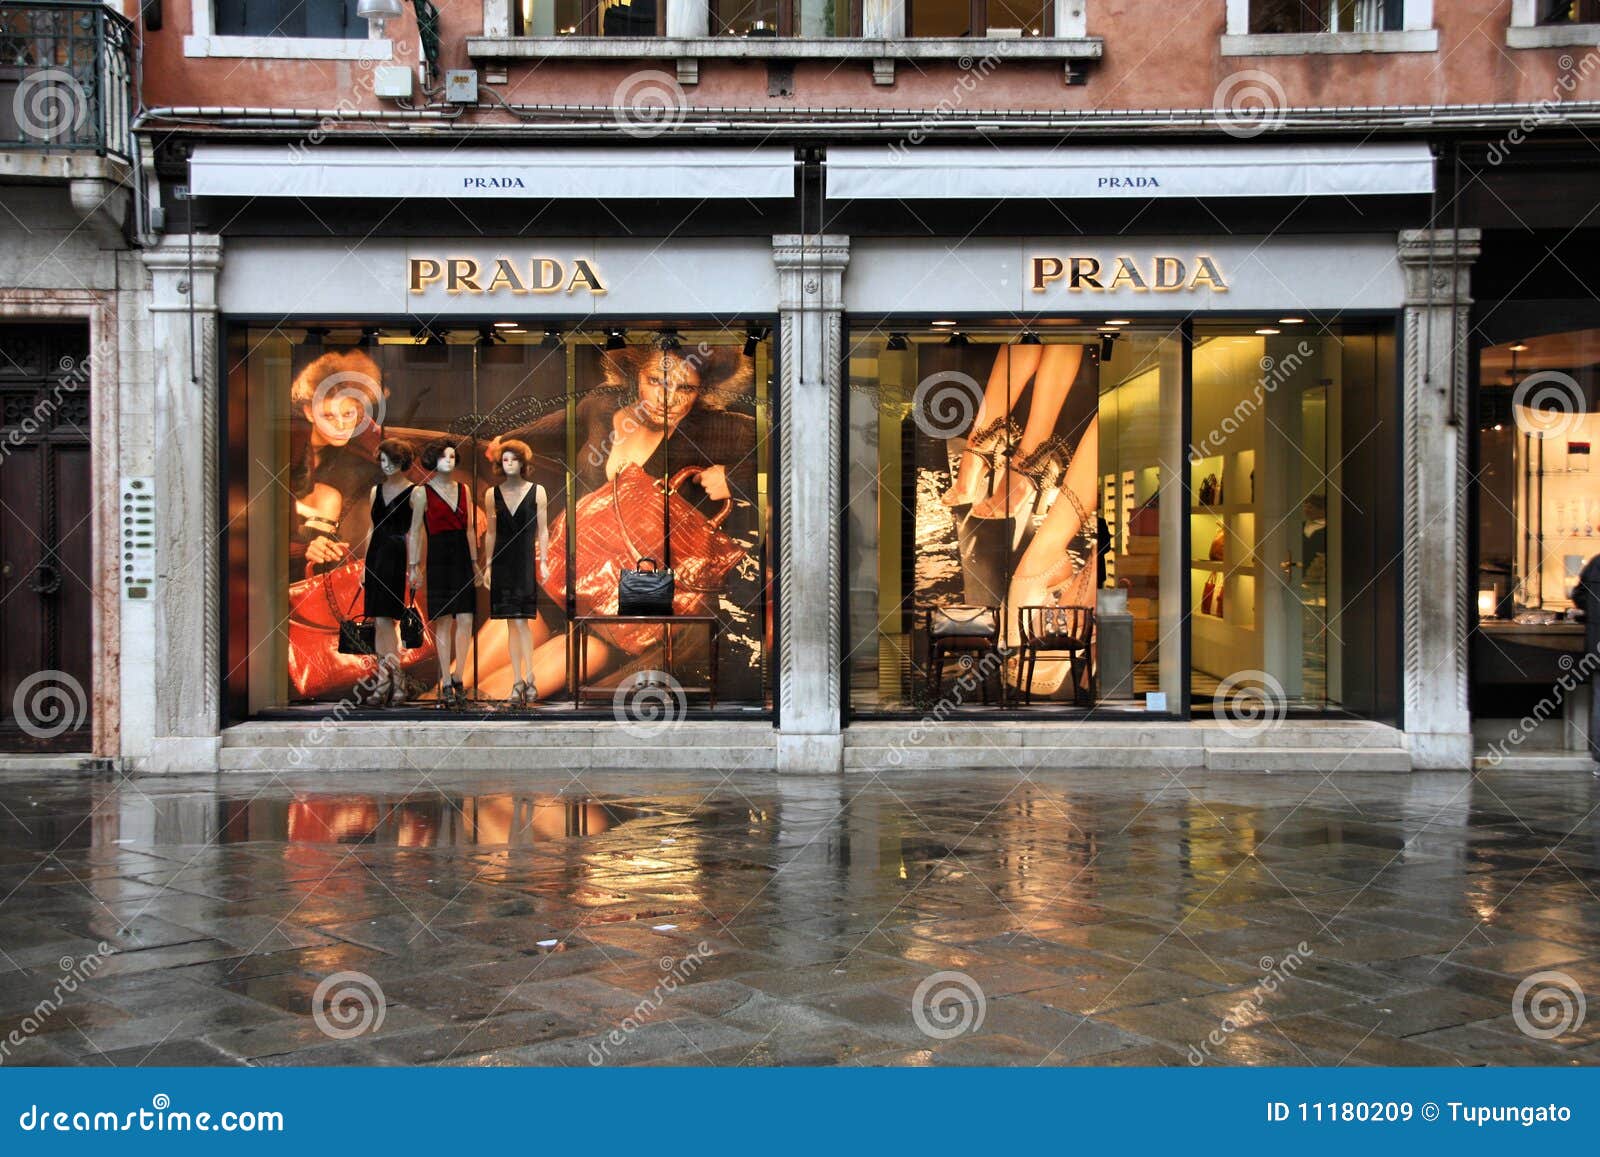 Luxury brand - Prada editorial stock image. Image of fashion - 11180209